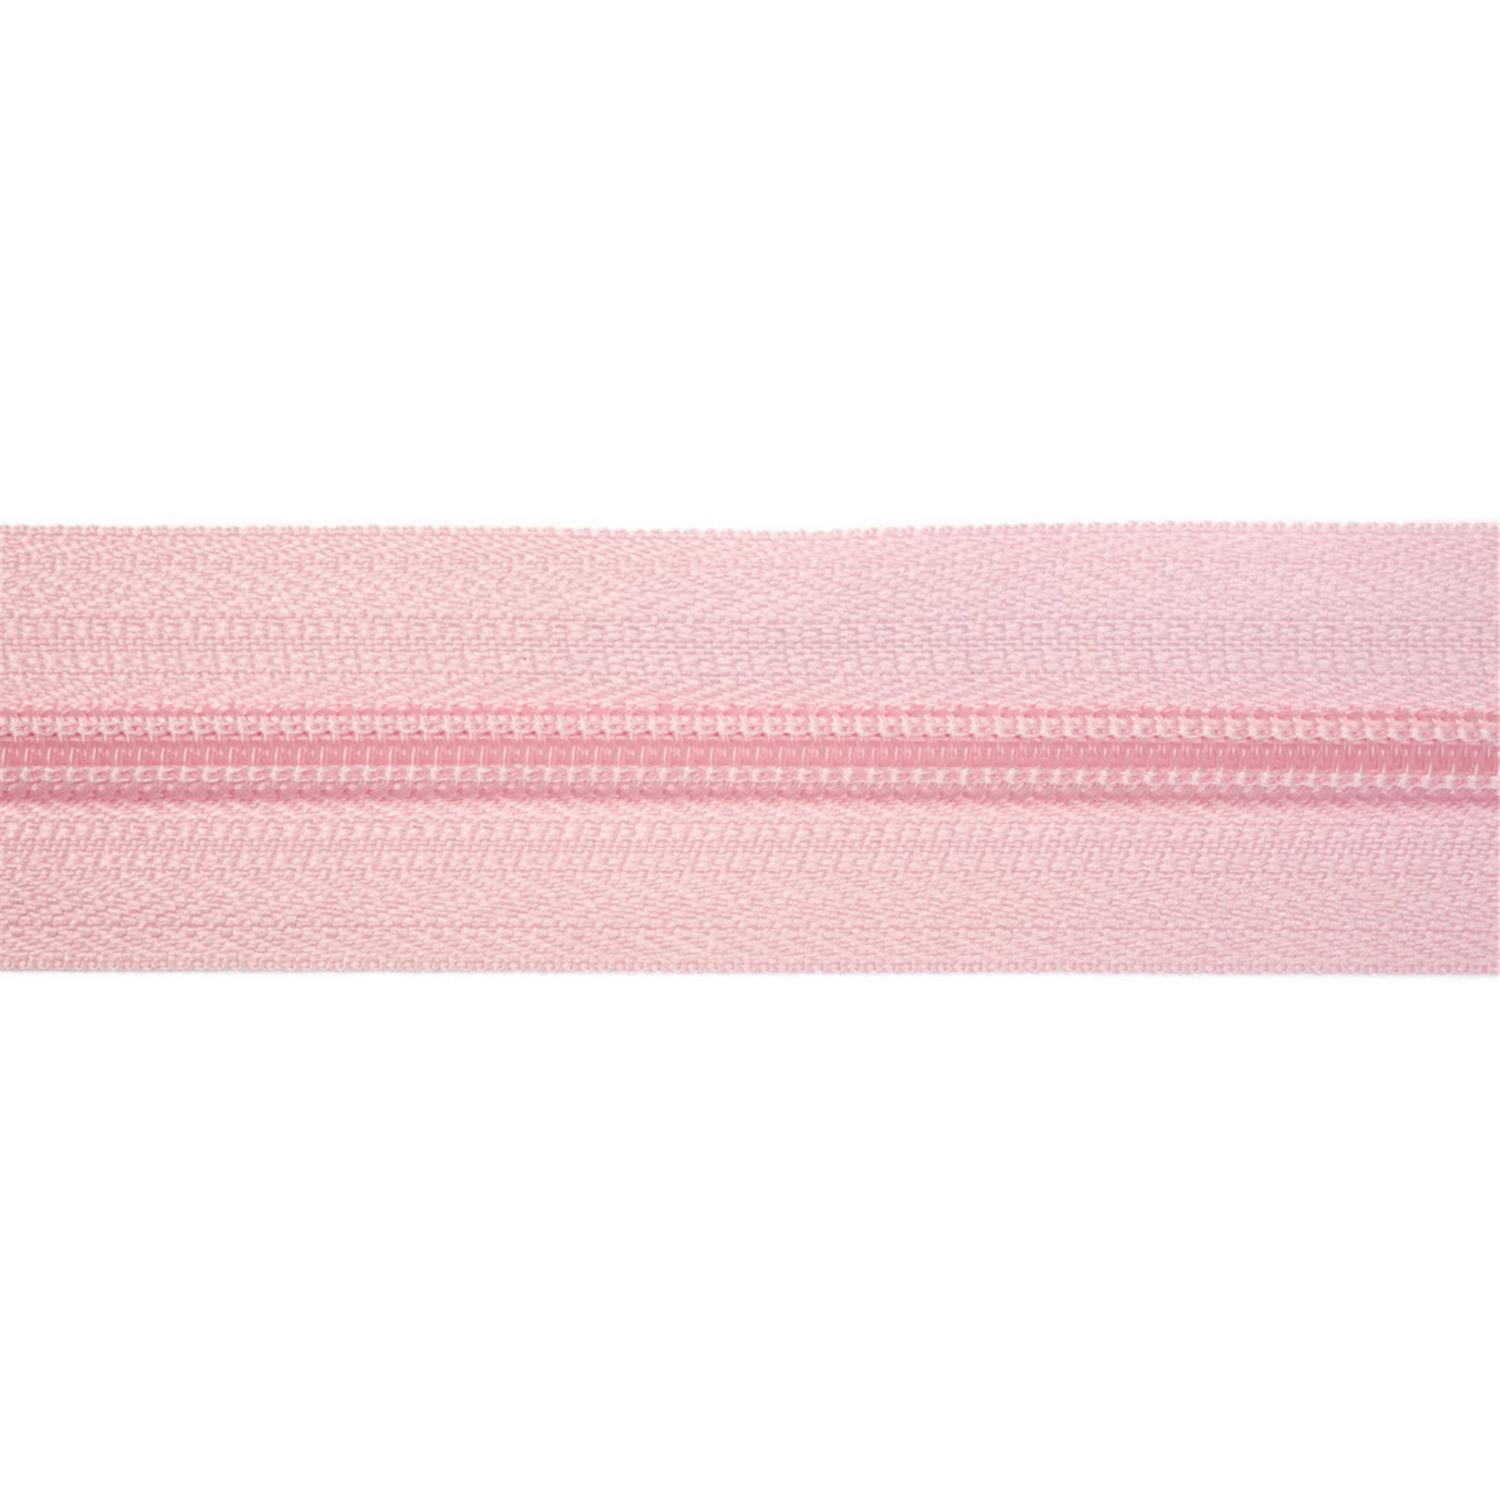 Reißverschluss endlos 5mm rosa #62 50 Meter Rolle